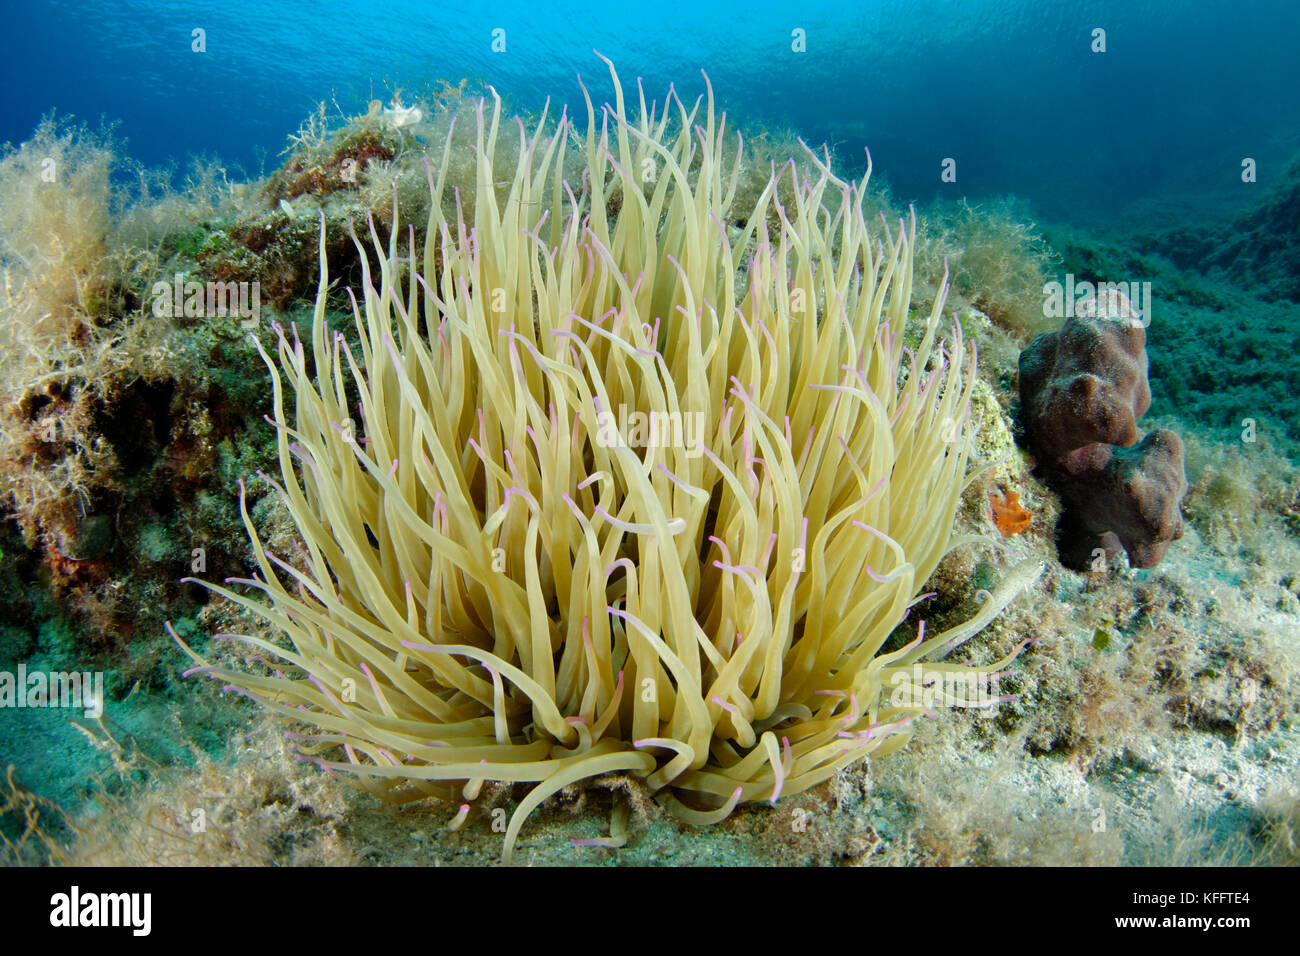 Snakelocks anemone, Anemonia sulcata, Sea anemone in Mediterranean Coralreef, Adriatic Sea, Mediterranean Sea, Croatia Stock Photo